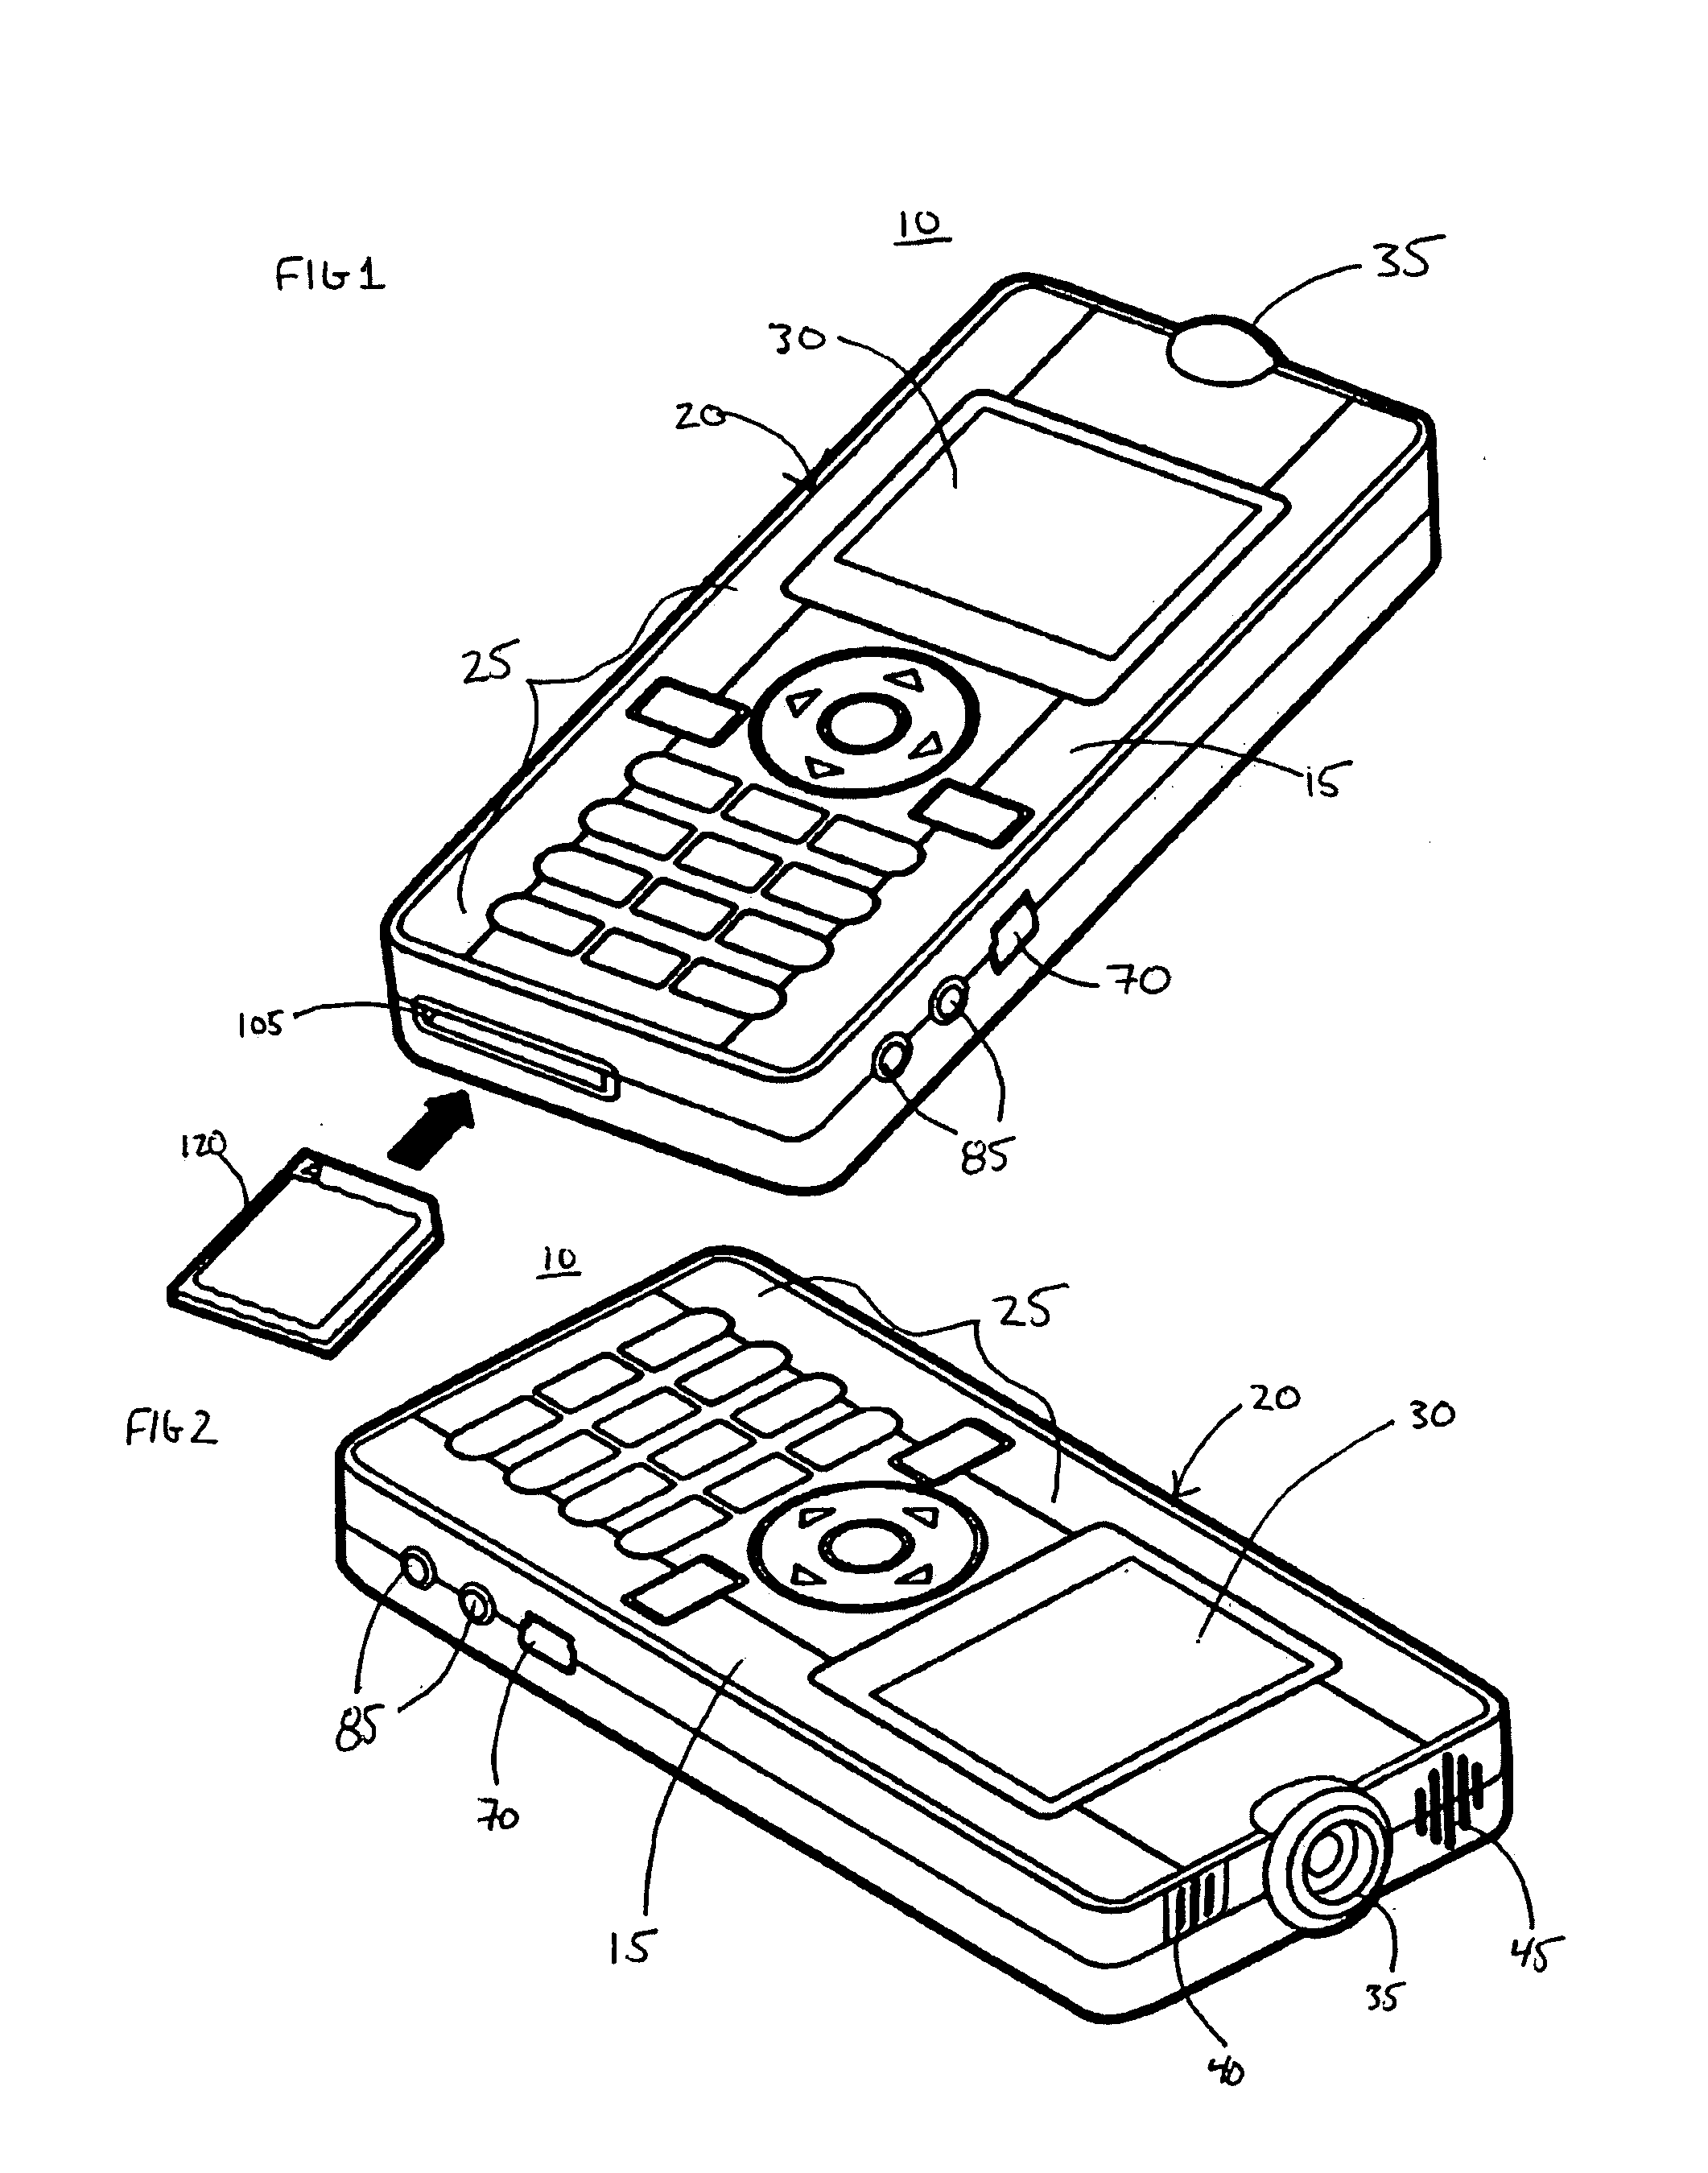 Portable multi-media device